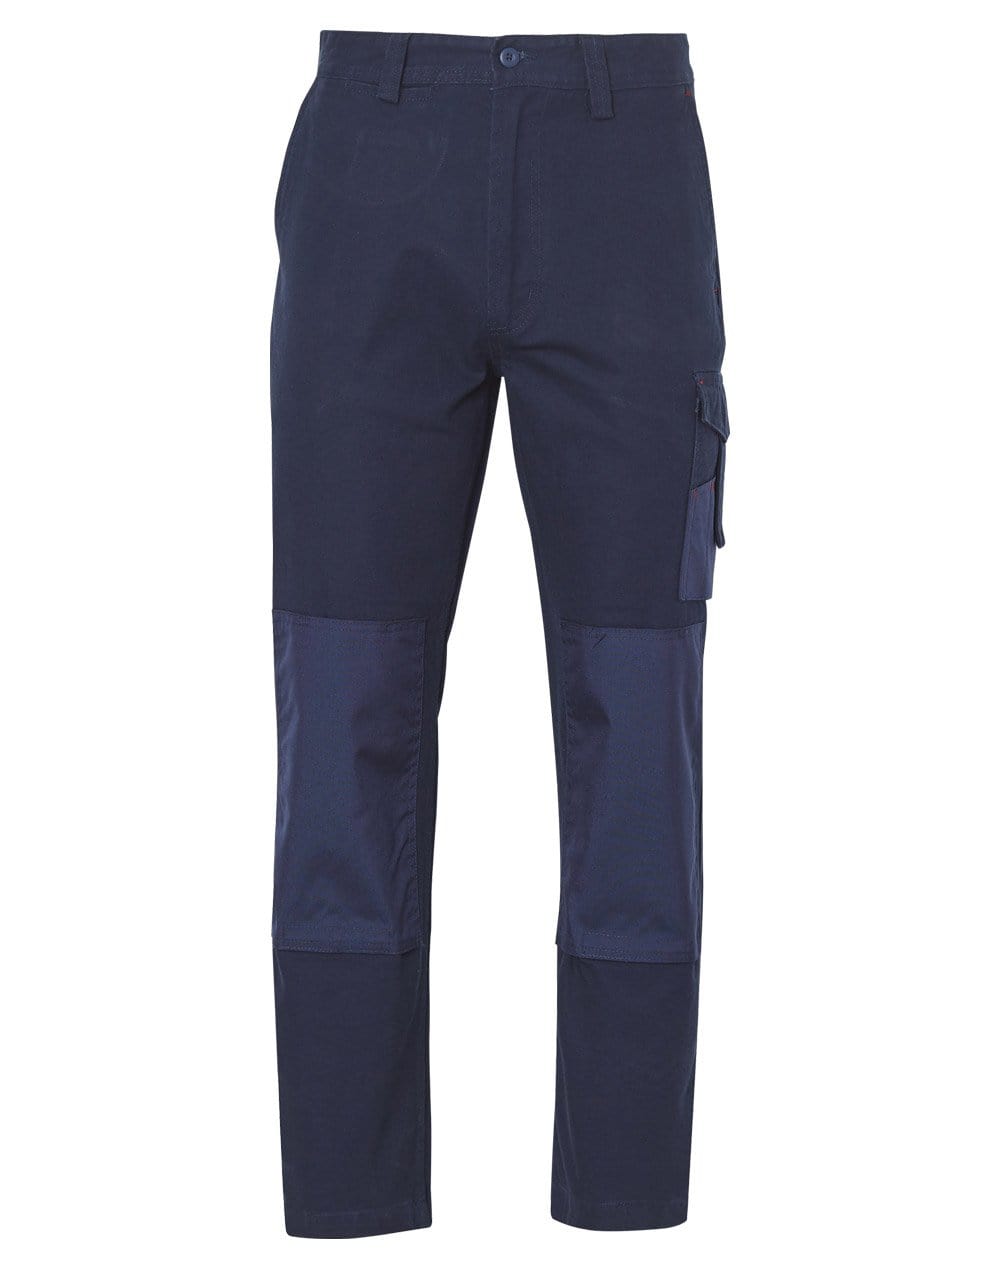 Australian Industrial Wear Work Wear Navy / 77R CORDURA DURABLE WORK PANTS Regular Size WP09